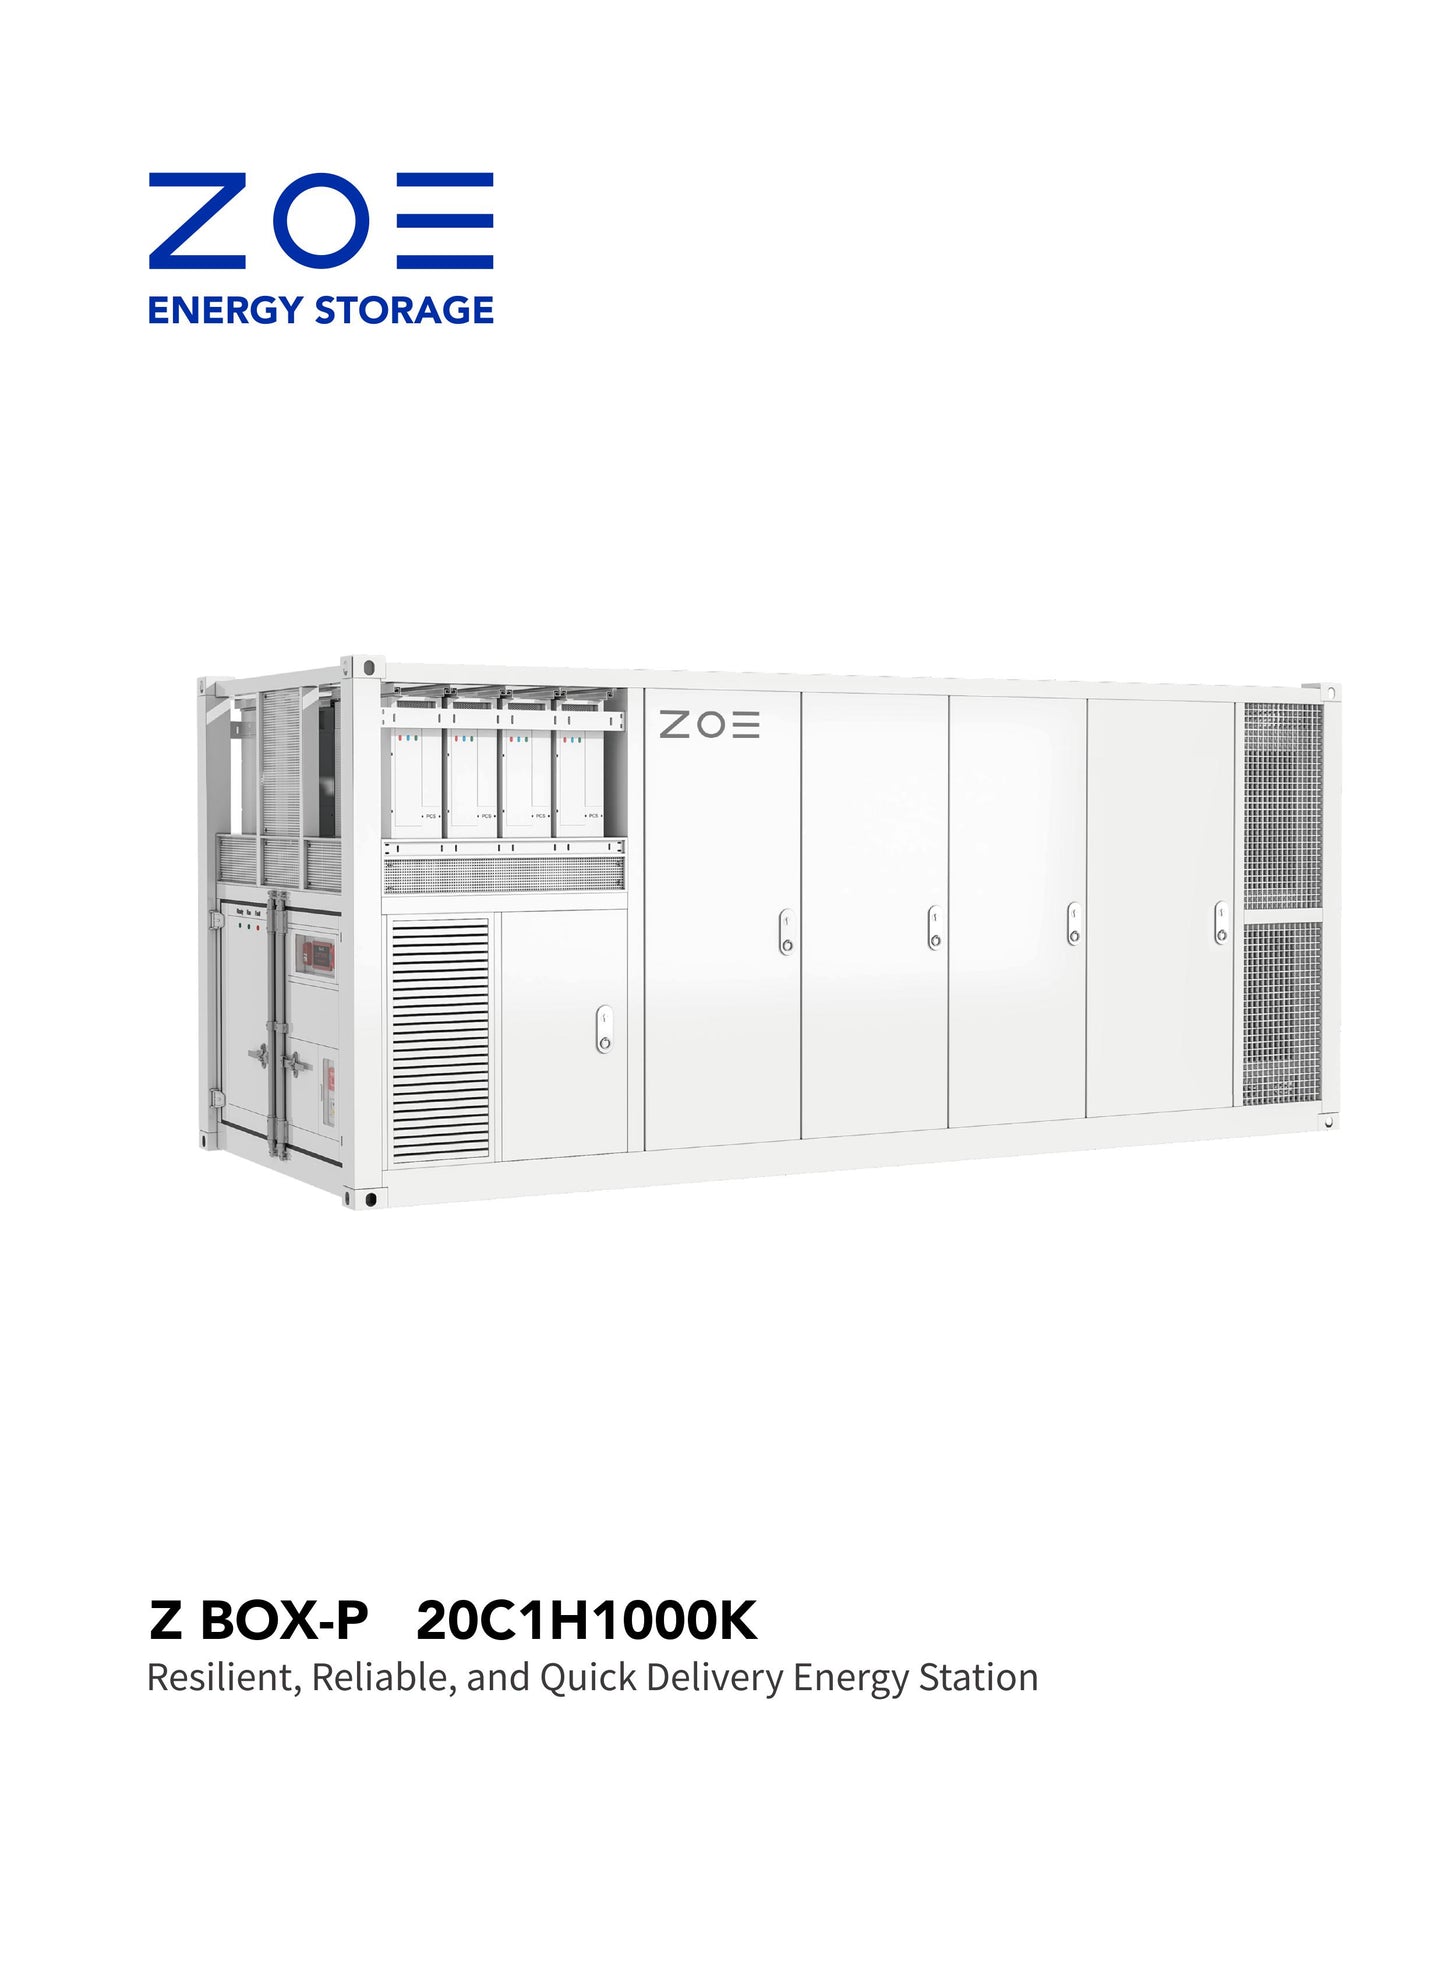 Z BOX-P 1,1MWh